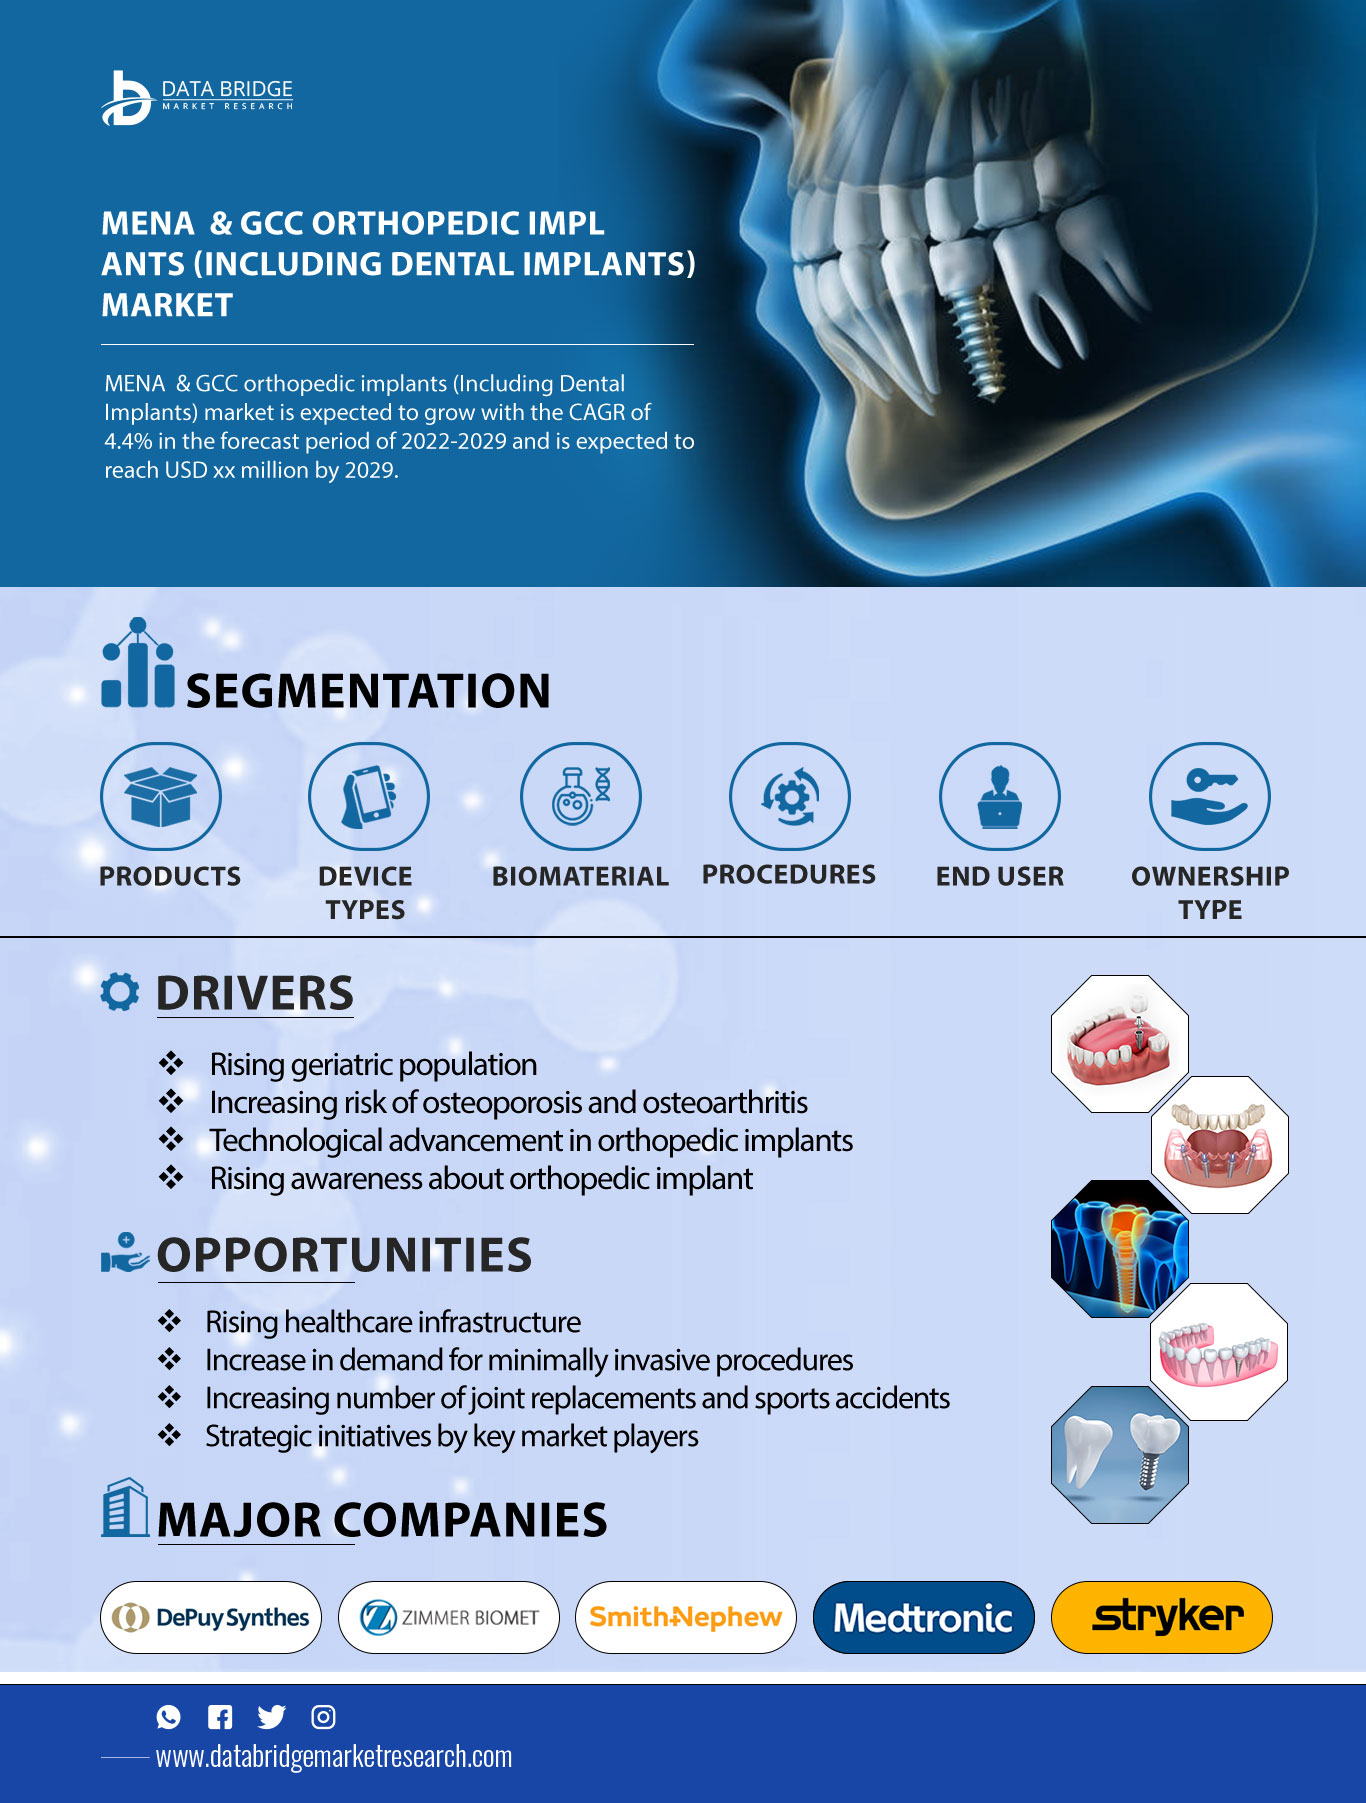 MENA and GCC Orthopedic Implants (Including Dental Implants) Market